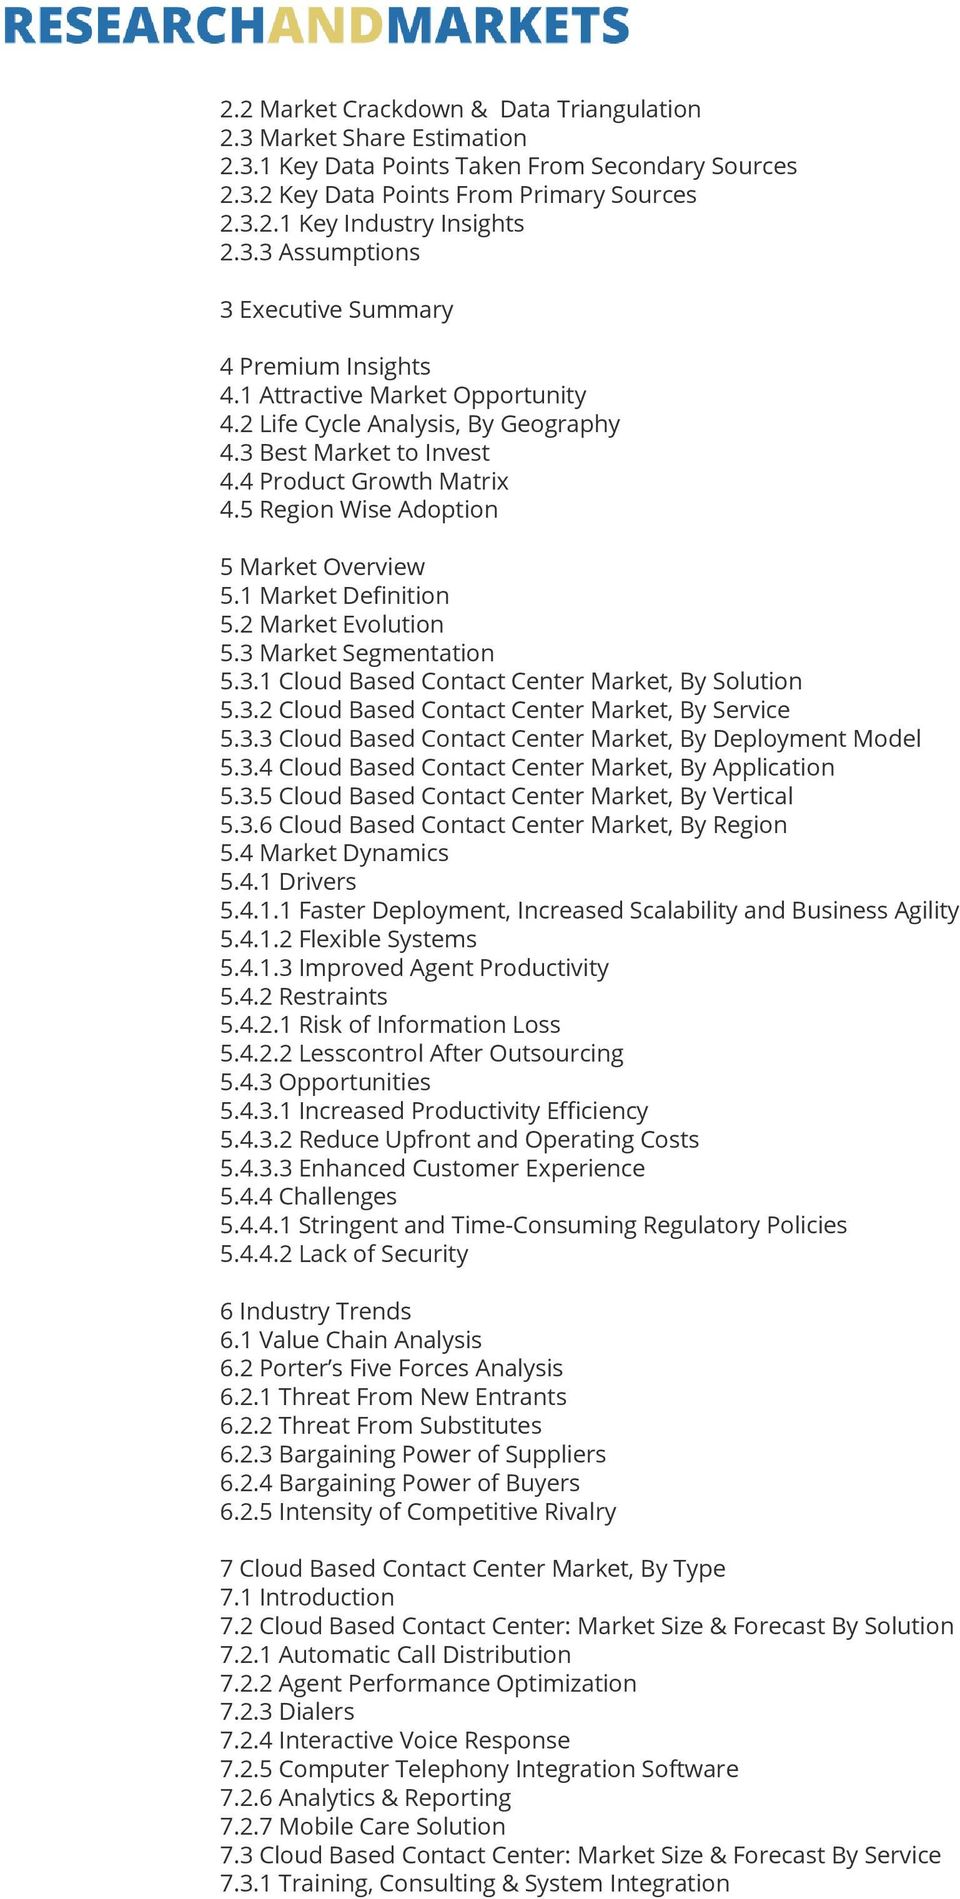 2 Market Evolution 5.3 Market Segmentation 5.3.1 Cloud Based Contact Center Market, By Solution 5.3.2 Cloud Based Contact Center Market, By Service 5.3.3 Cloud Based Contact Center Market, By Deployment Model 5.